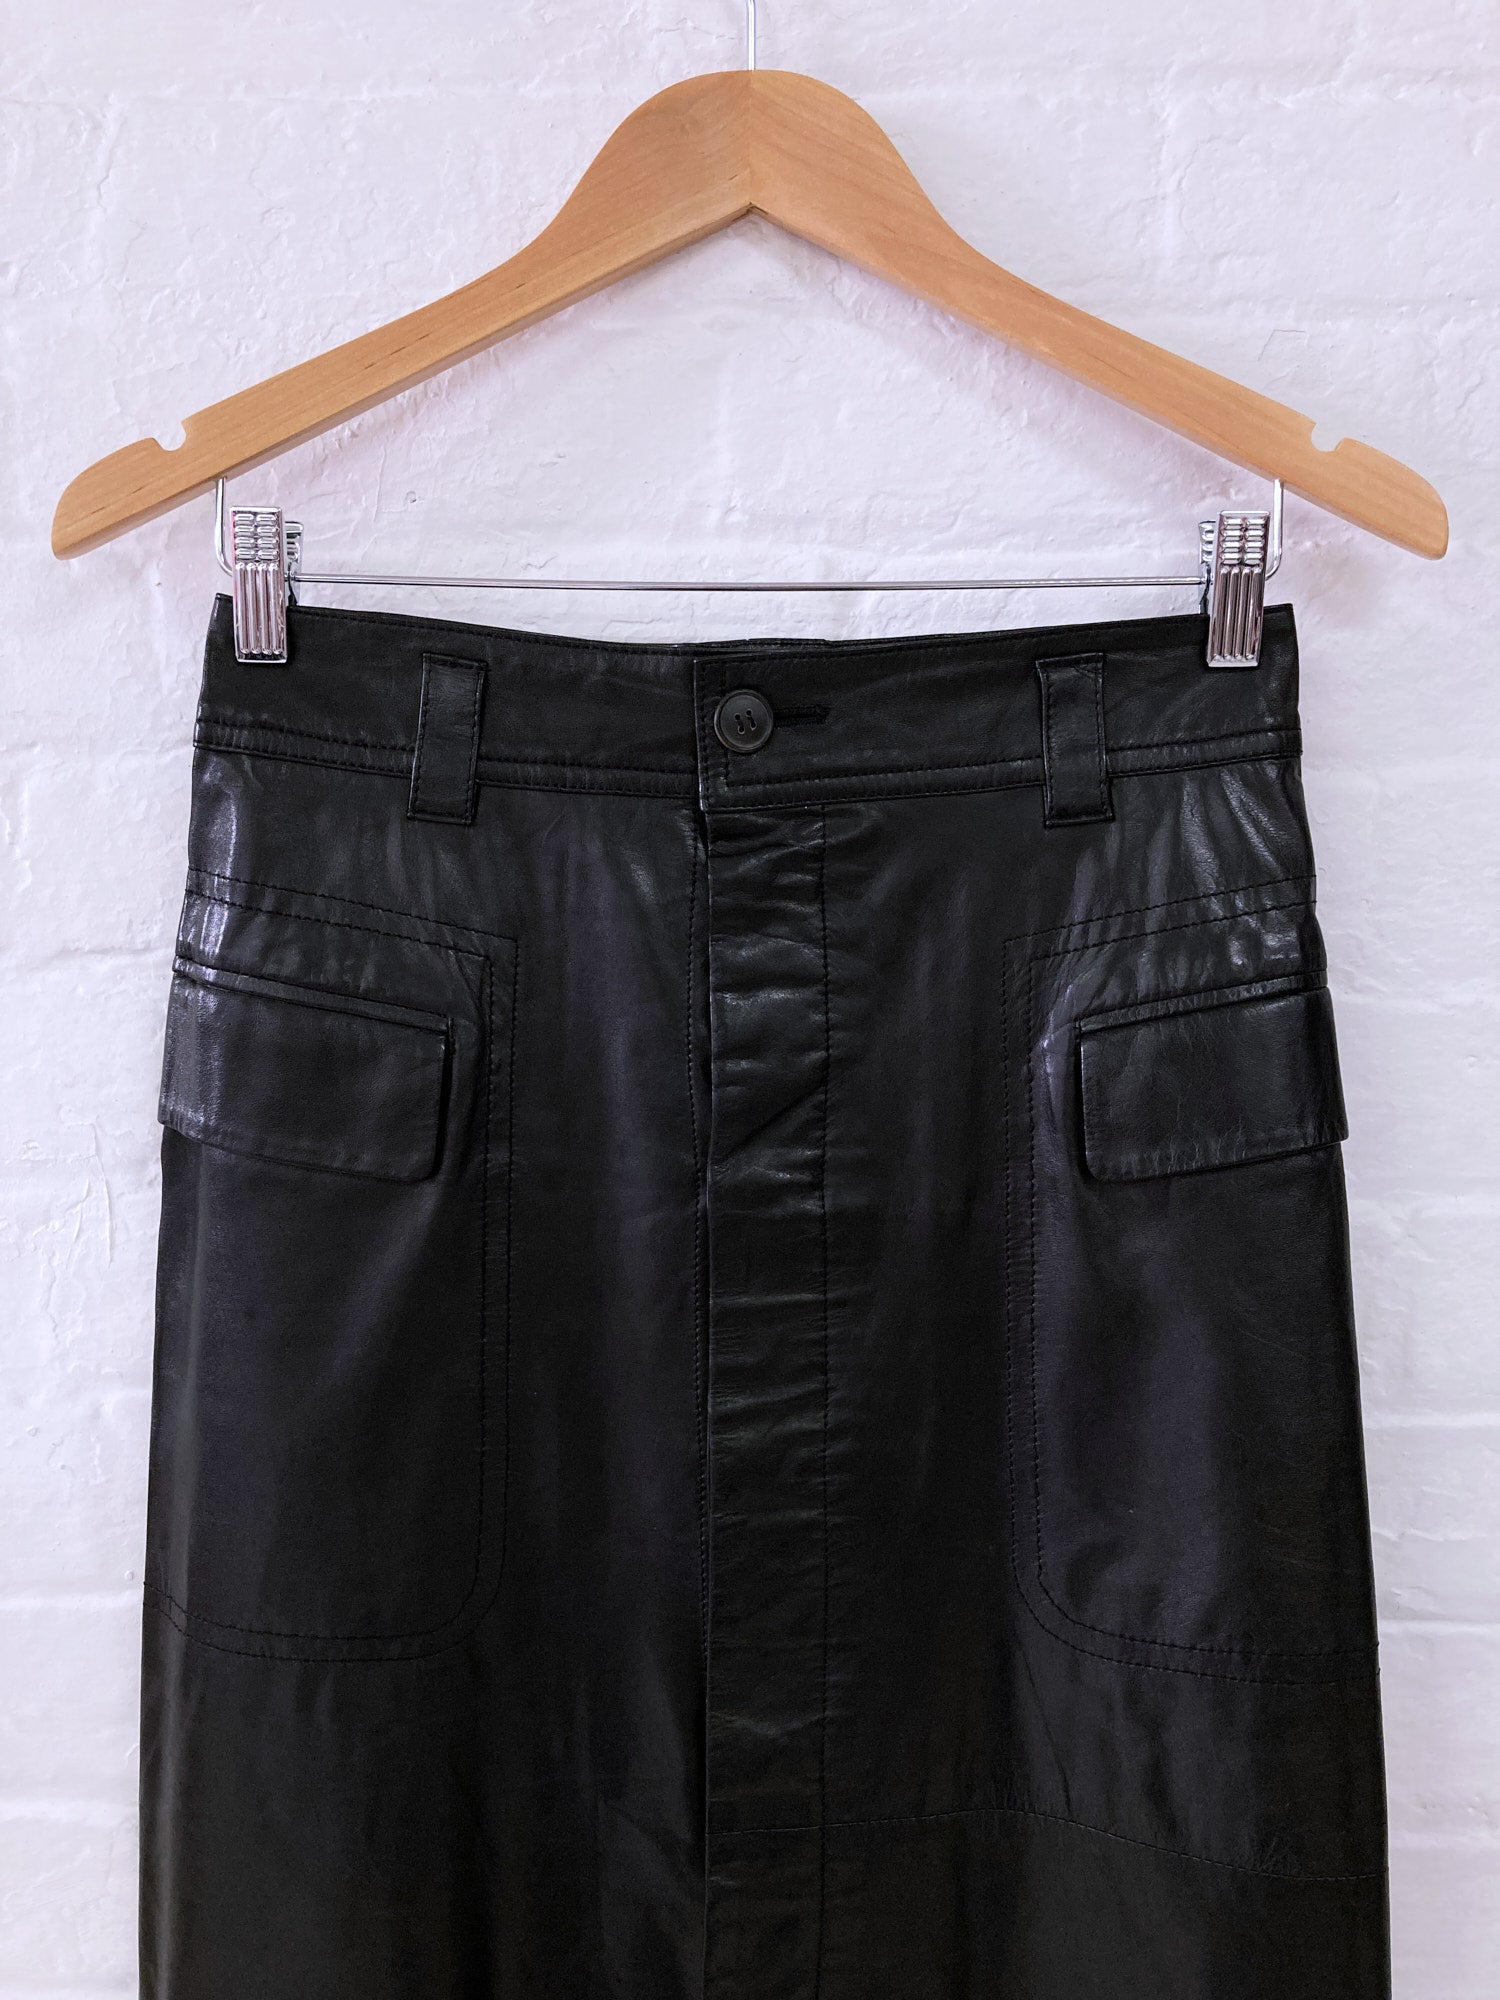 Tricot Comme des Garcons 1994 black leather cargo pocket maxi skirt - S